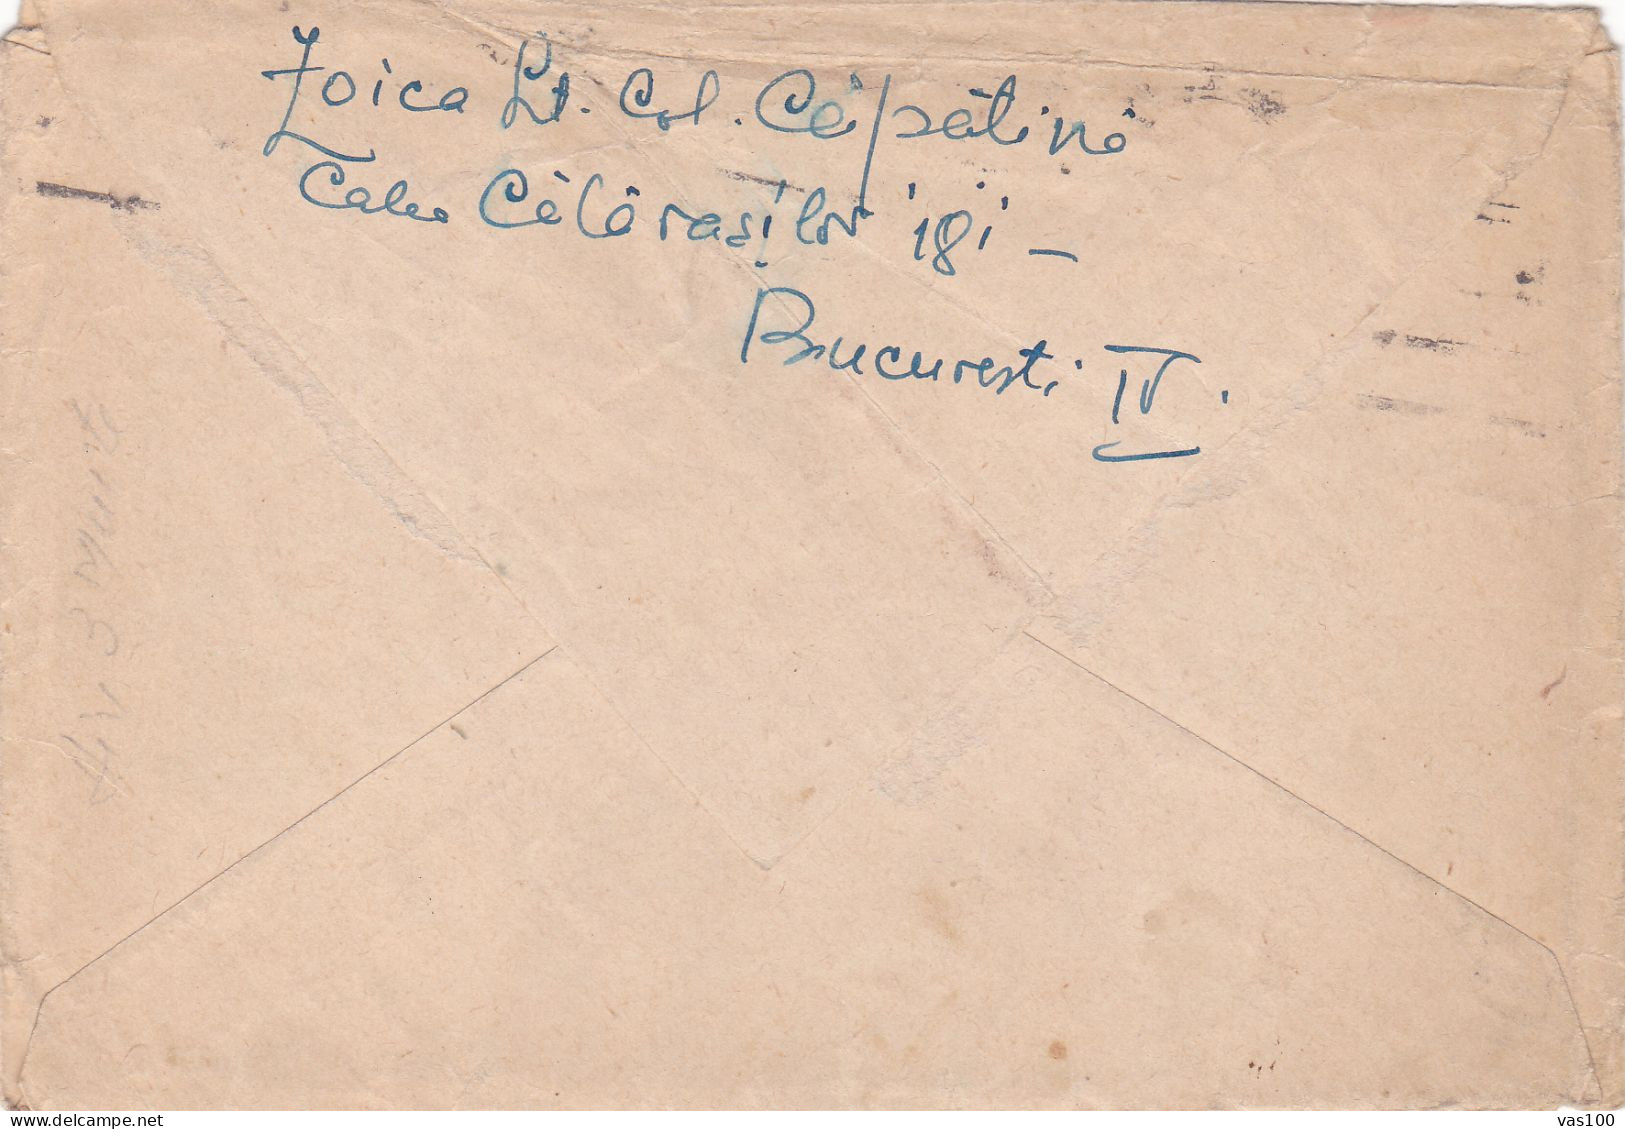 ROMANIA , 1945, WWII CENSORED,  ENVELOPE SENDED TO BATTLEFIELD - Cartas De La Segunda Guerra Mundial